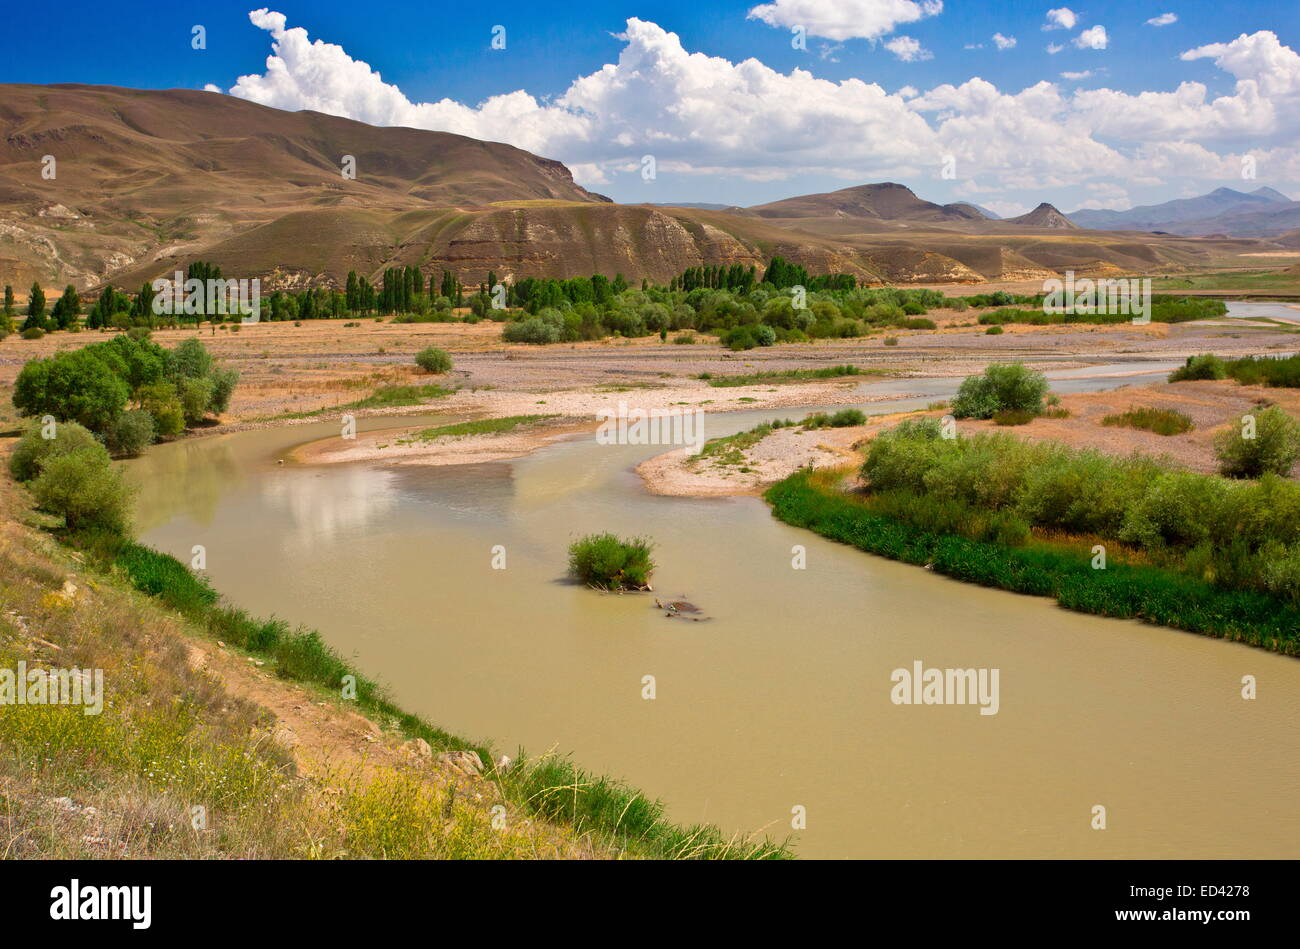 River flowing through dry steppe grassland, semi-desert, in north-east Turkey, east of Erzurum. Stock Photo